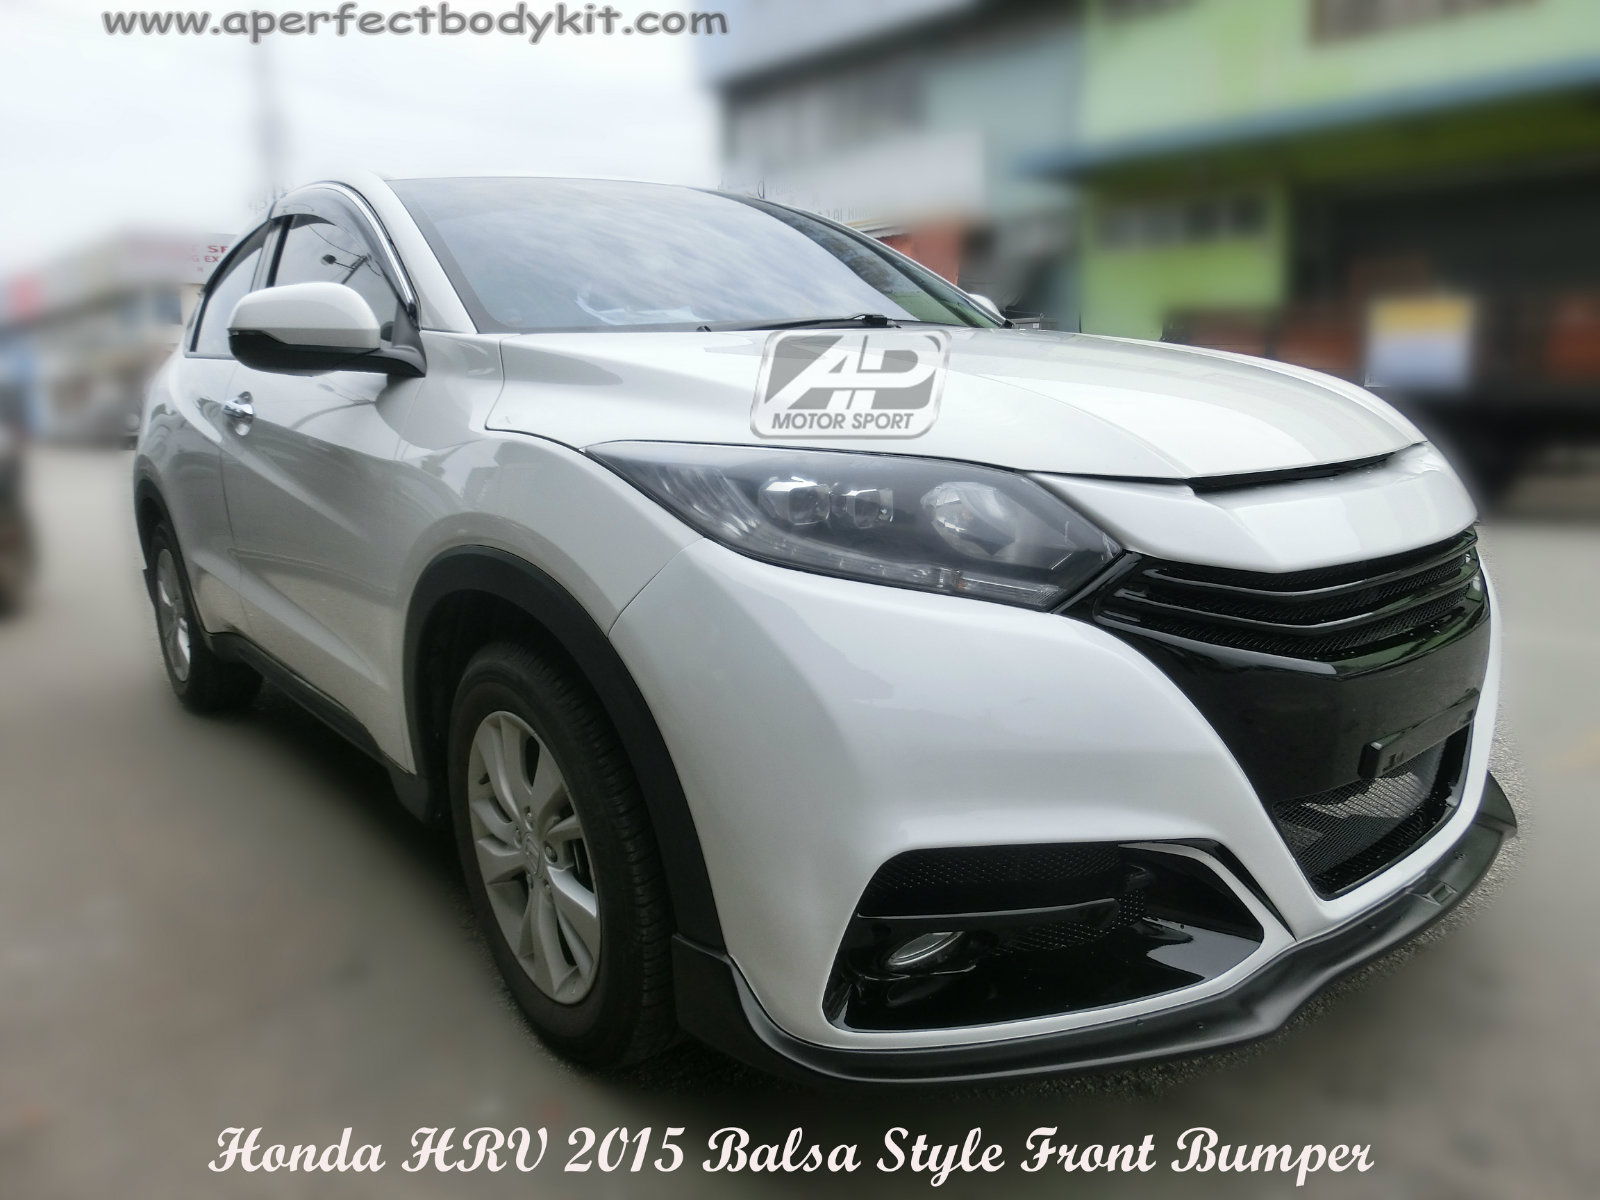 Honda HRV 2015 Balsa Style Front Bumper 